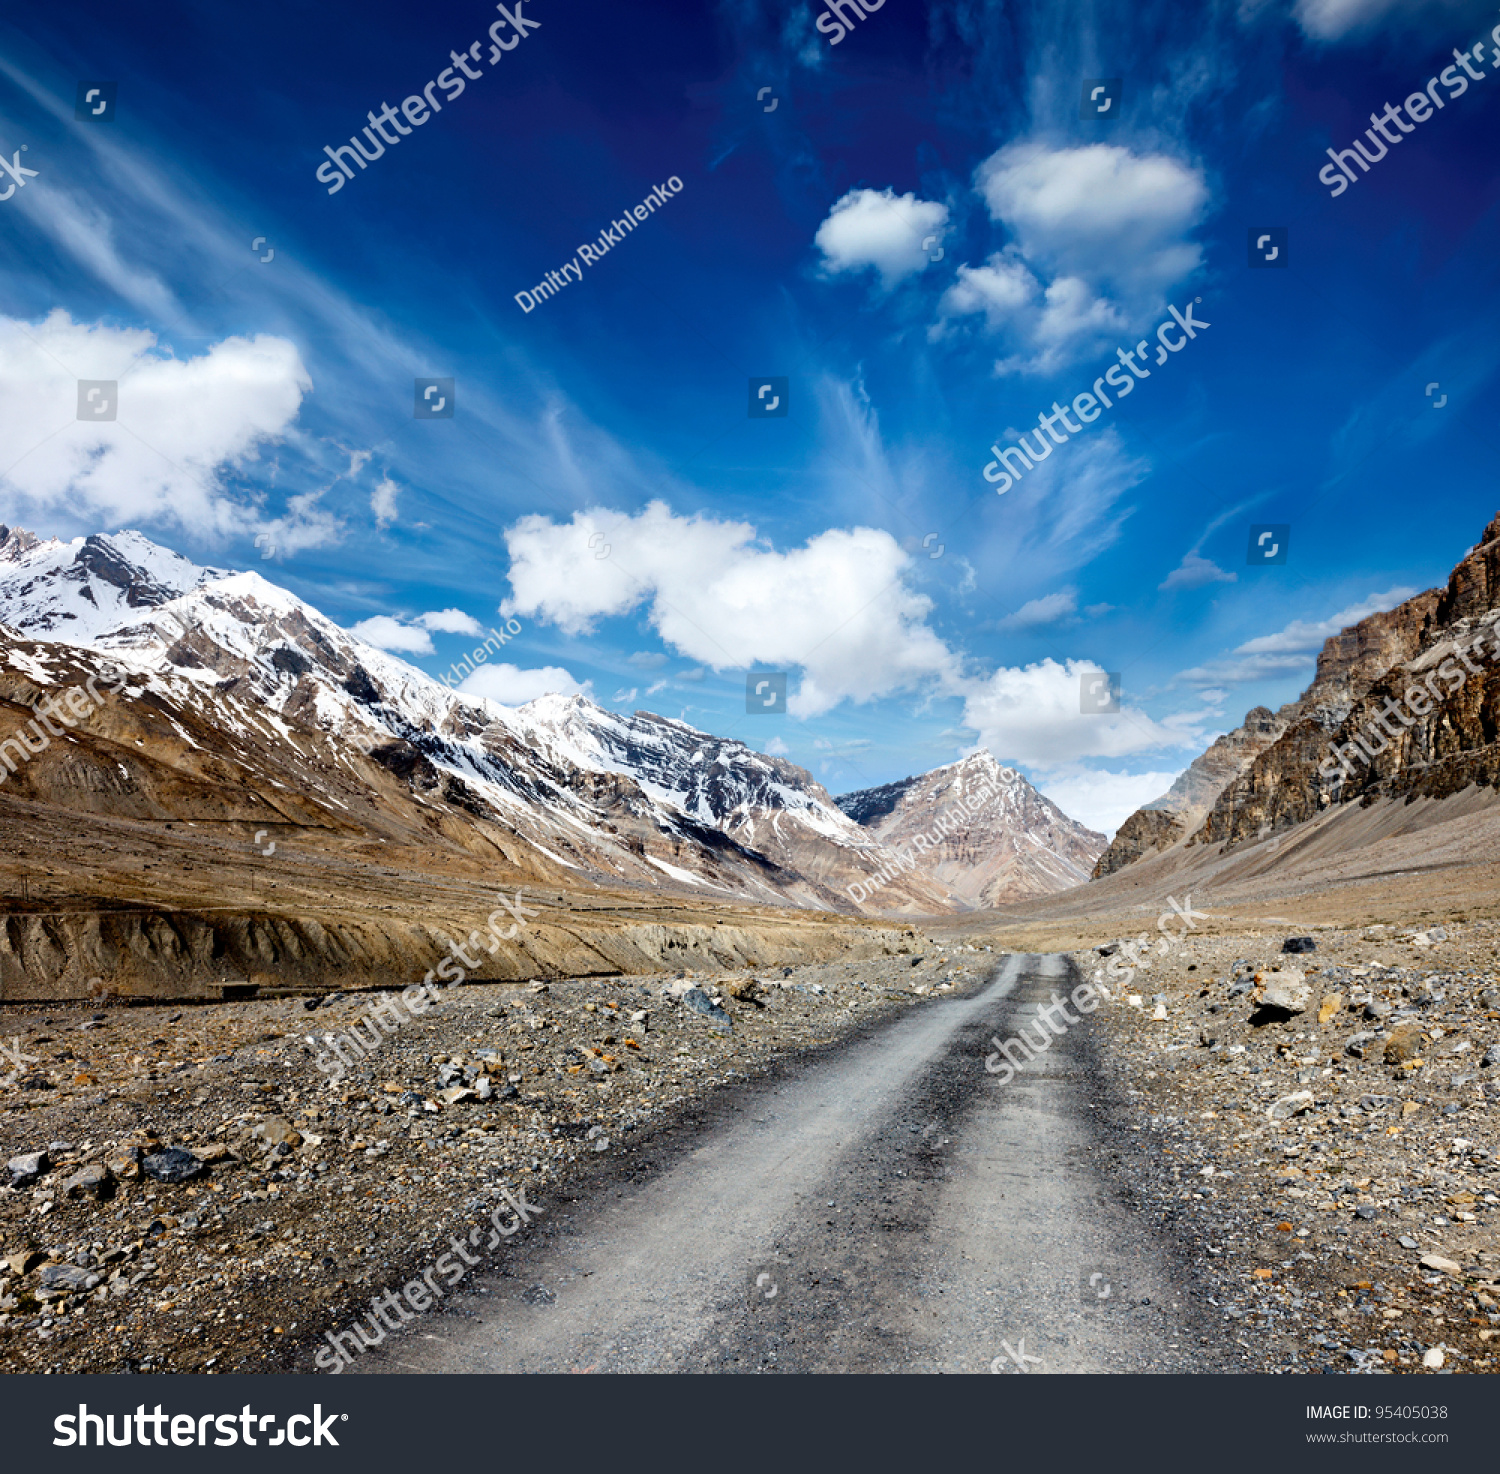 Road in mountains (Himalayas). Spiti Valley,  Himachal Pradesh, India #95405038